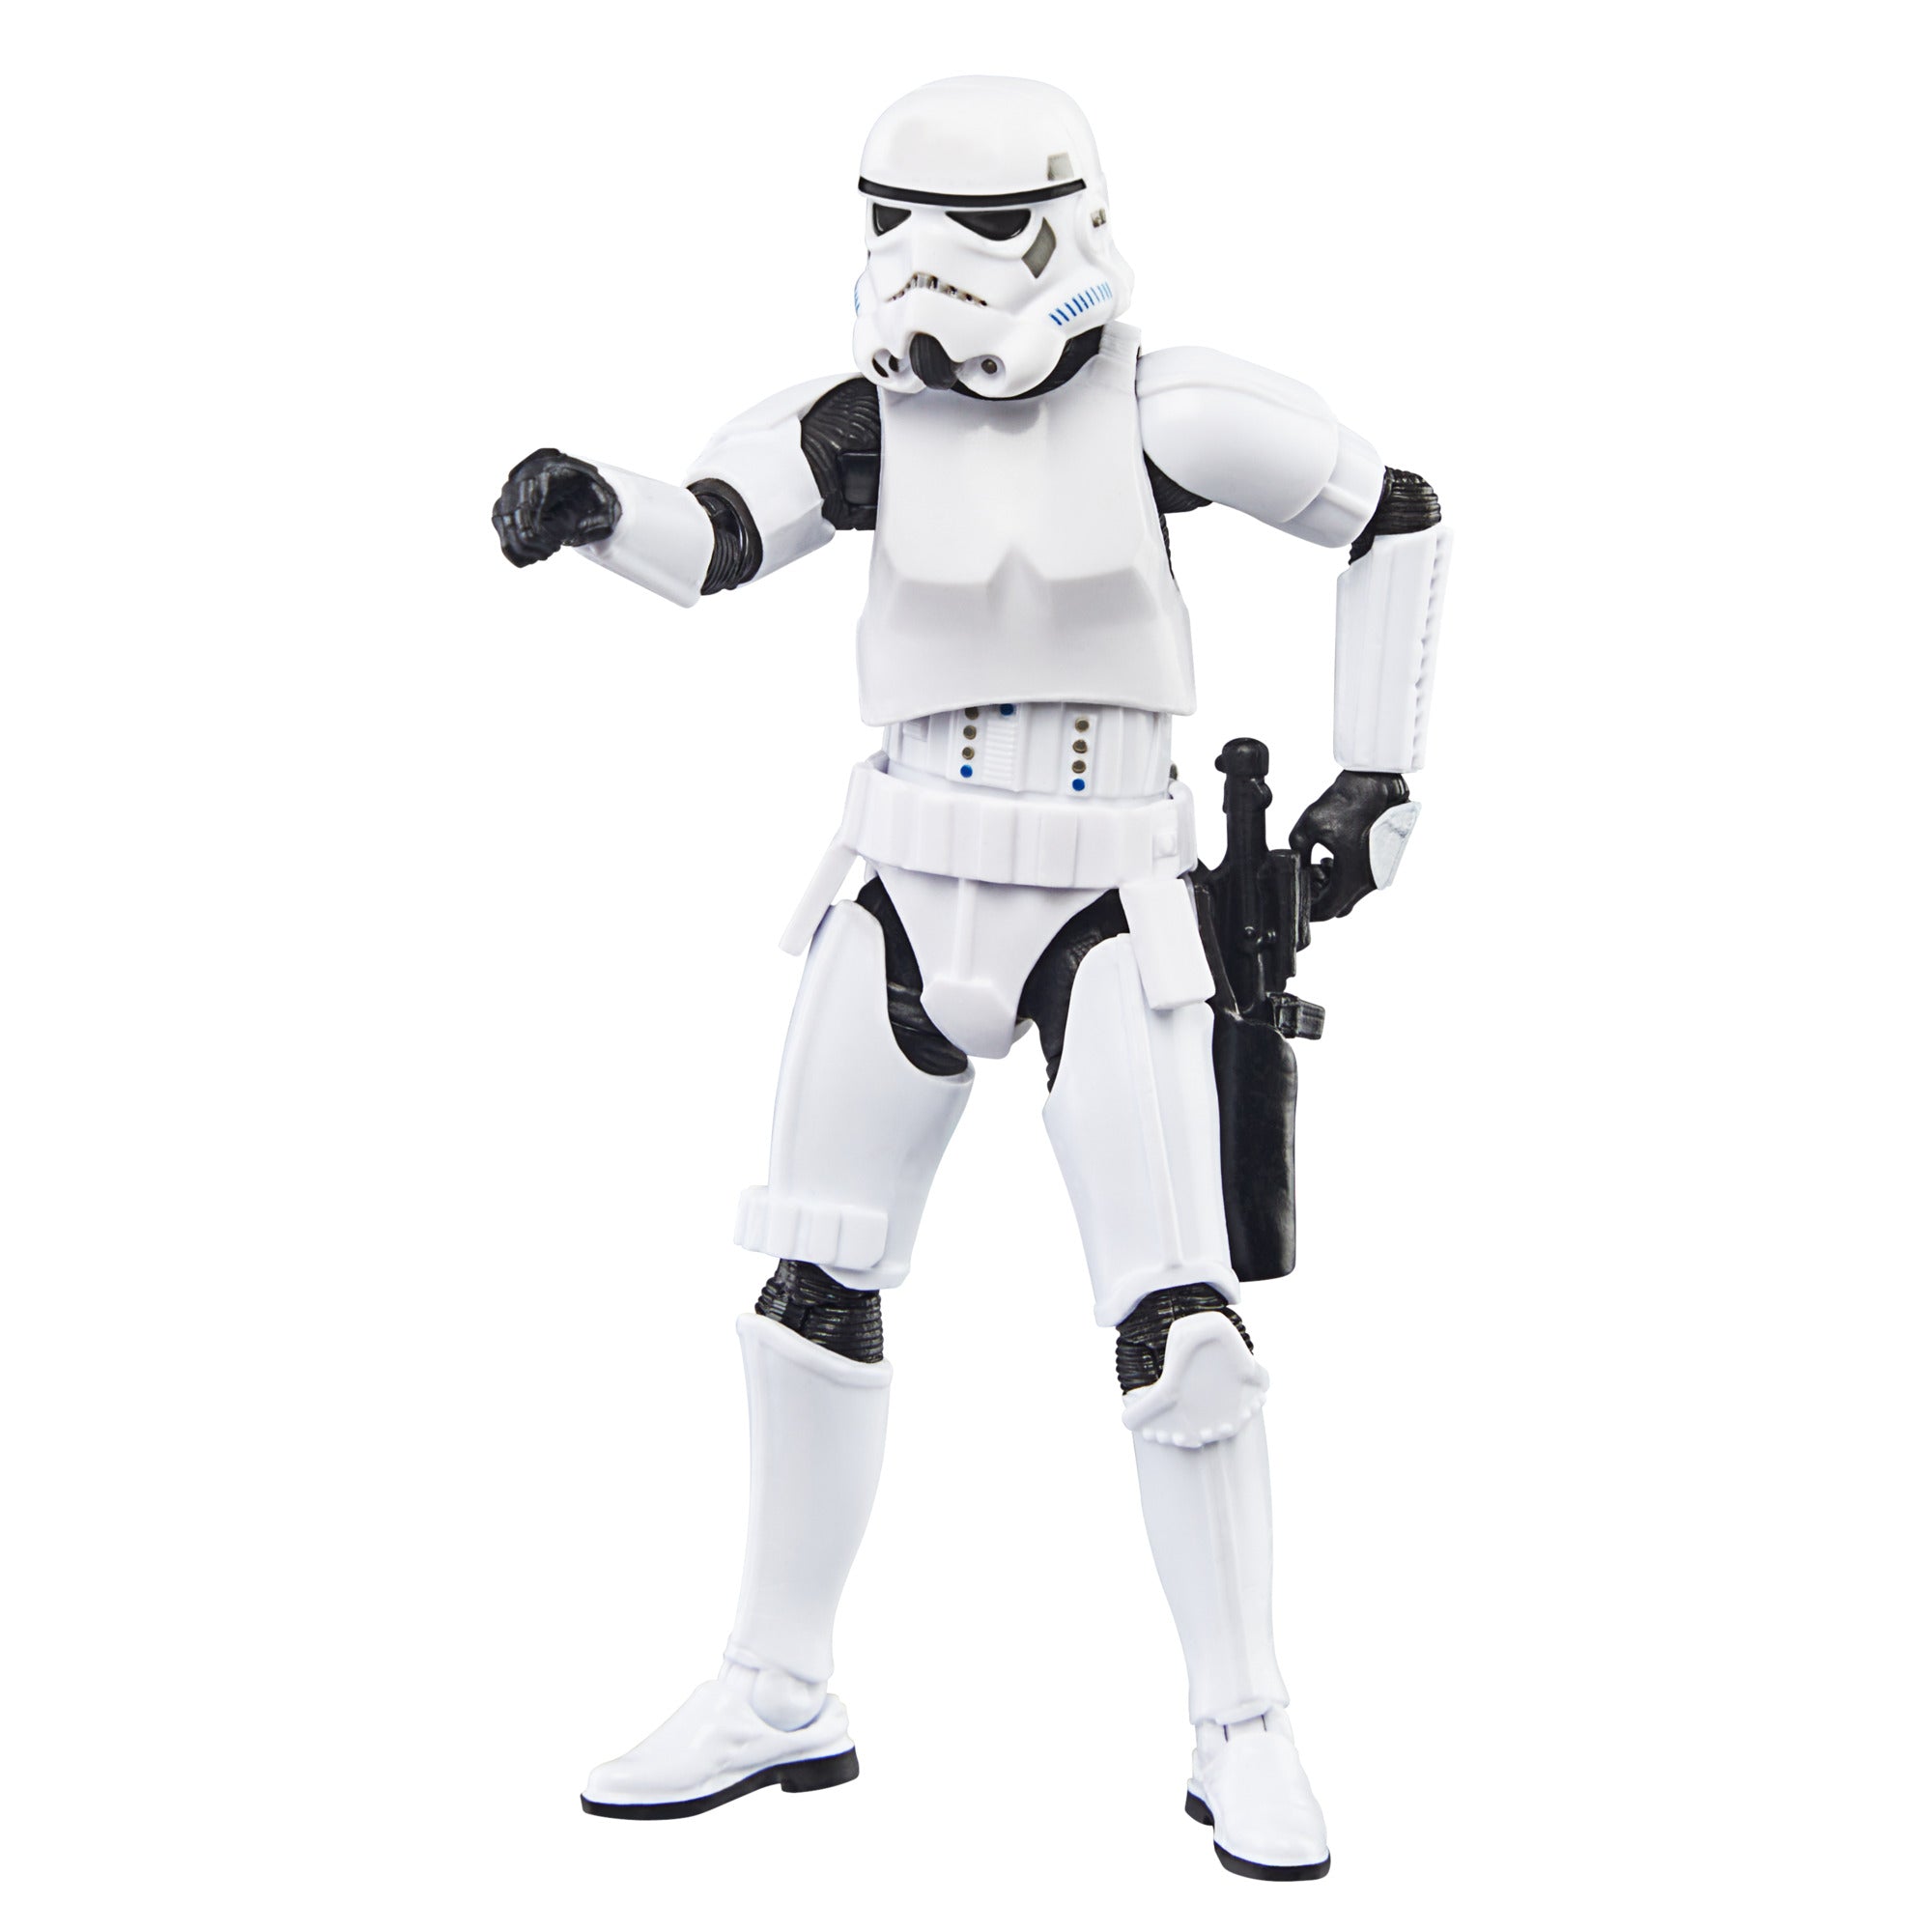 Star Wars: The Vintage Collection Stormtrooper - Presale – Hasbro 